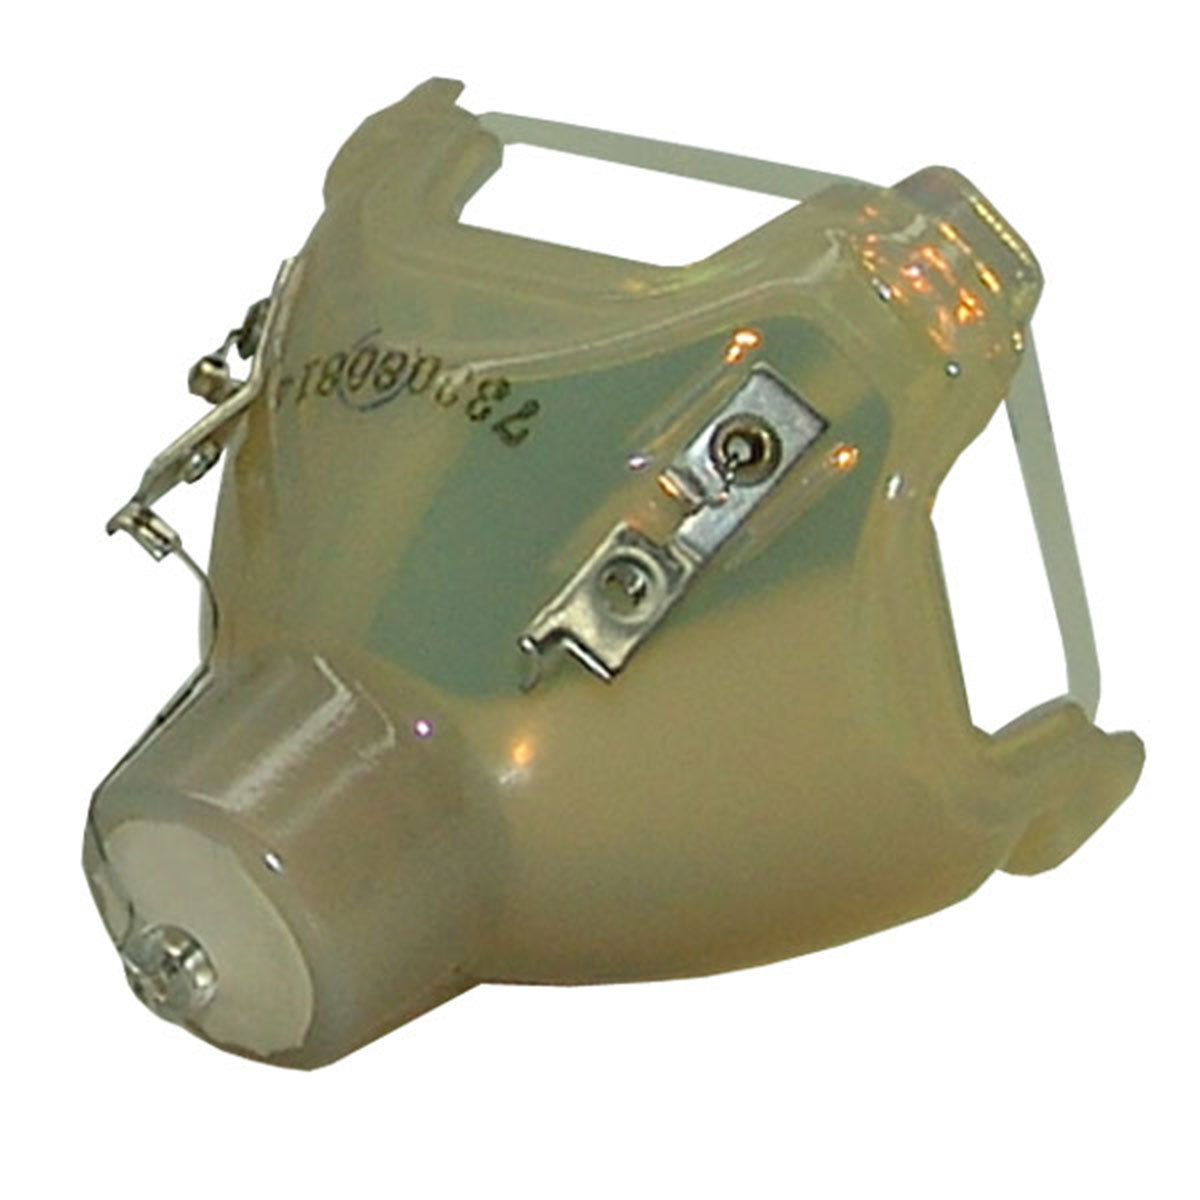 Dukane 456-236 Osram Projector Bare Lamp